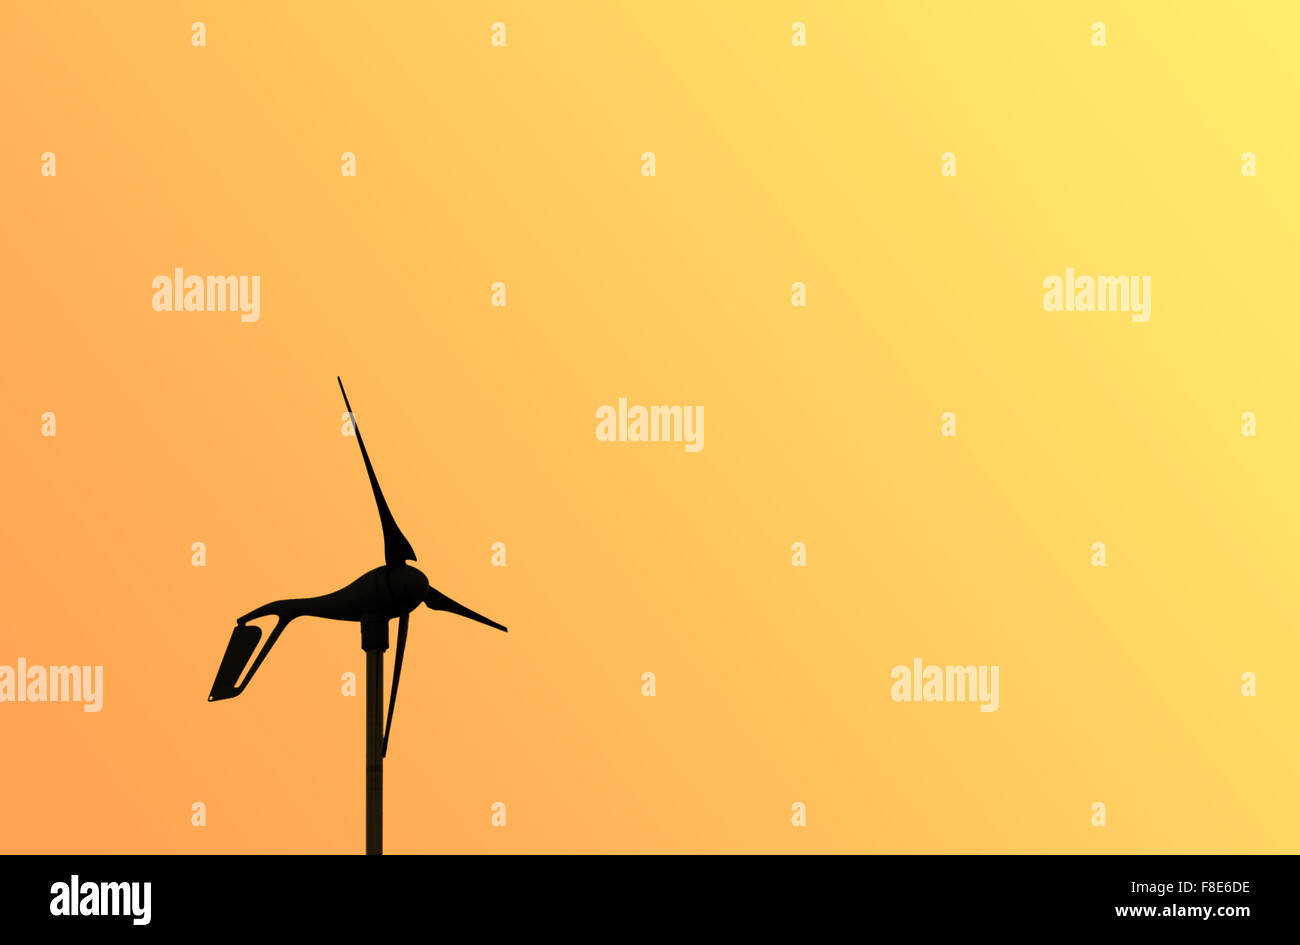 Wind generator turbine propellers against yellow background Stock Photo